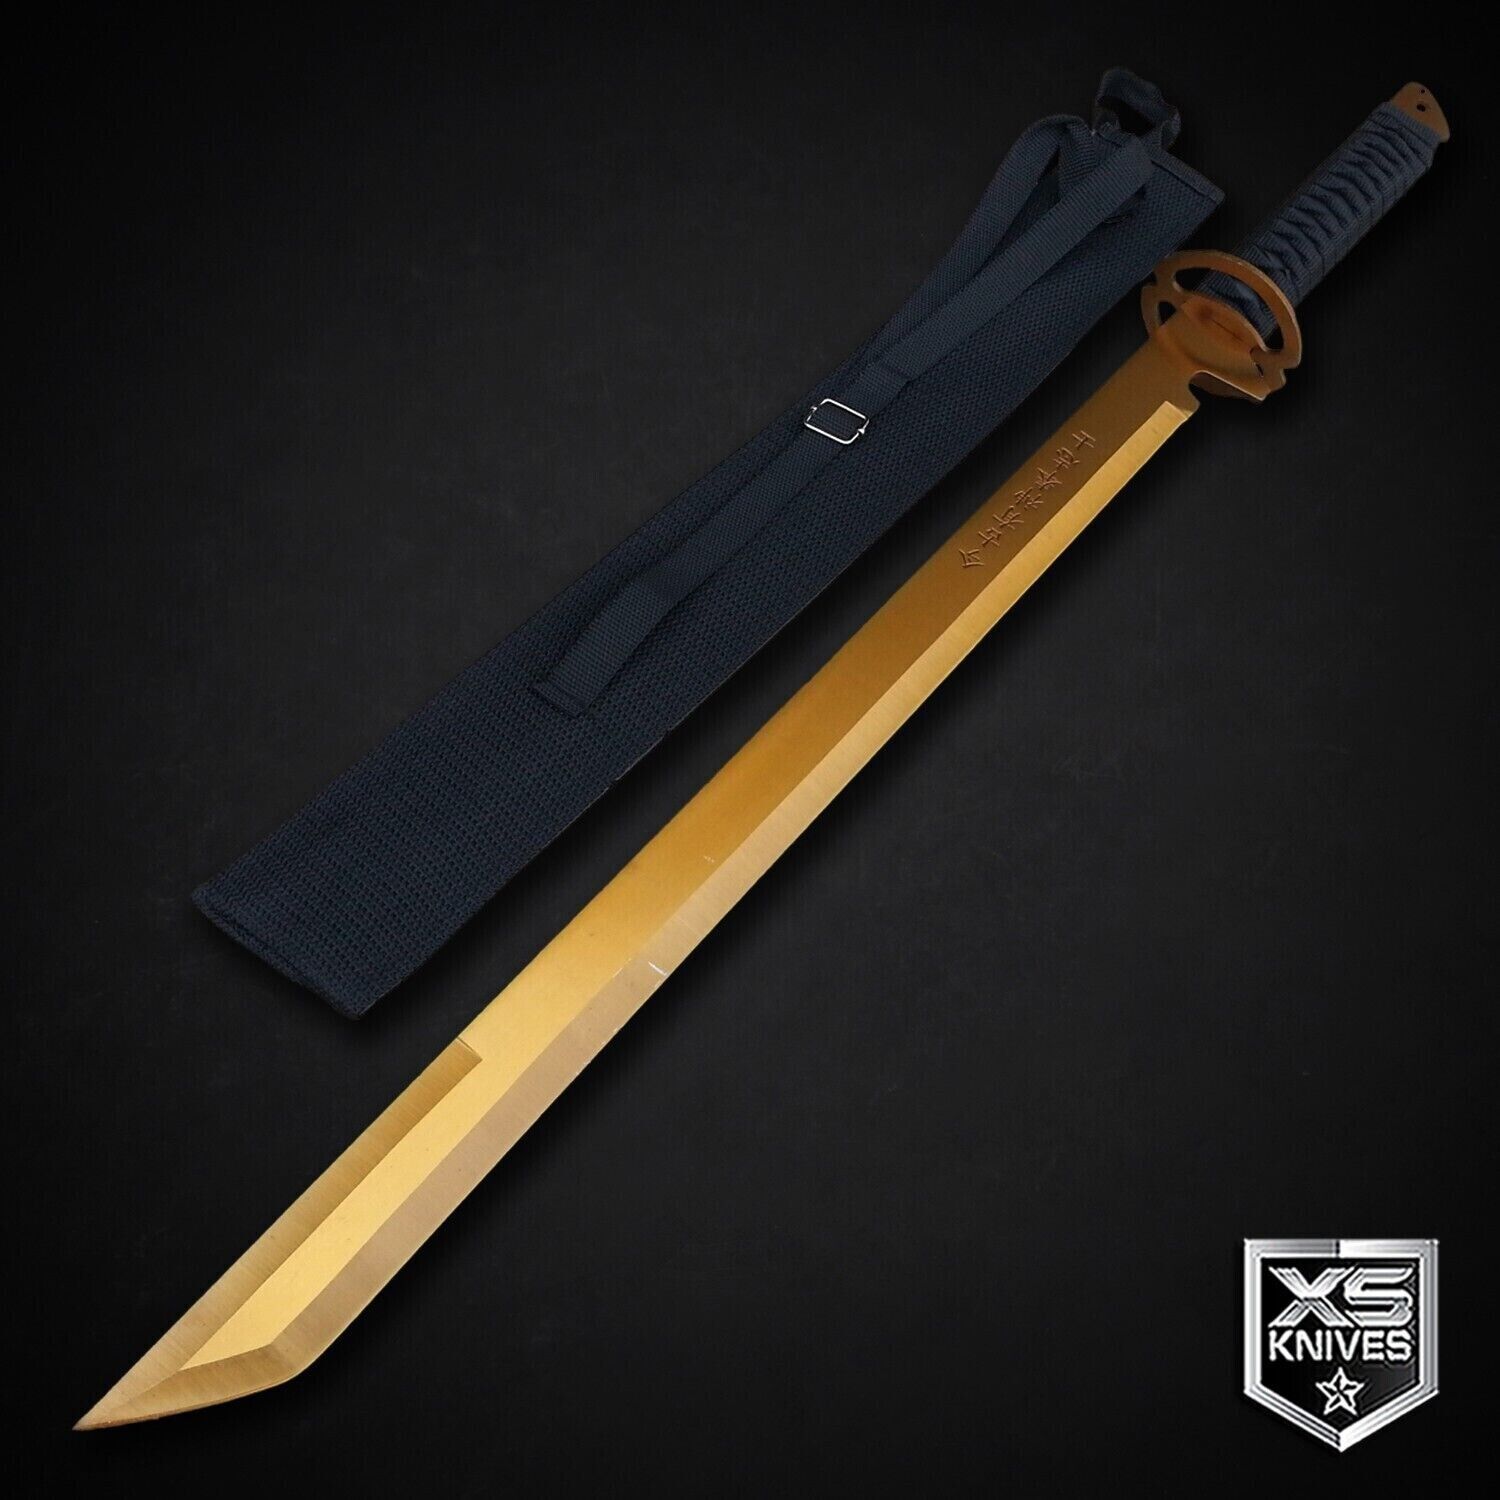 Ninja Sword Full Tang Tanto Machete Titanium Gold Blade Japanese Katana EPIC 27